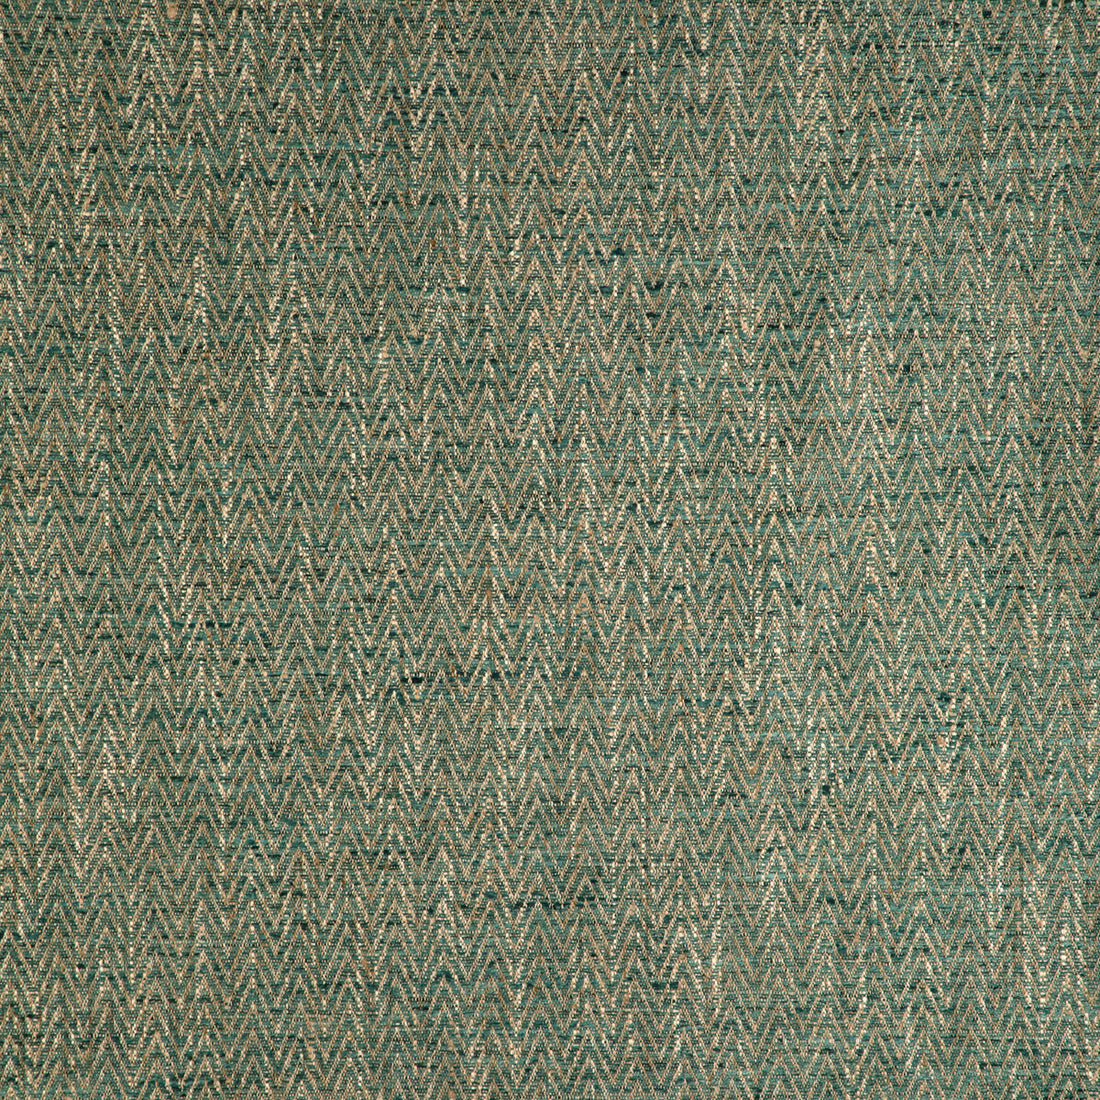 Kravet Smart fabric in 34092-316 color - pattern 34092.316.0 - by Kravet Smart